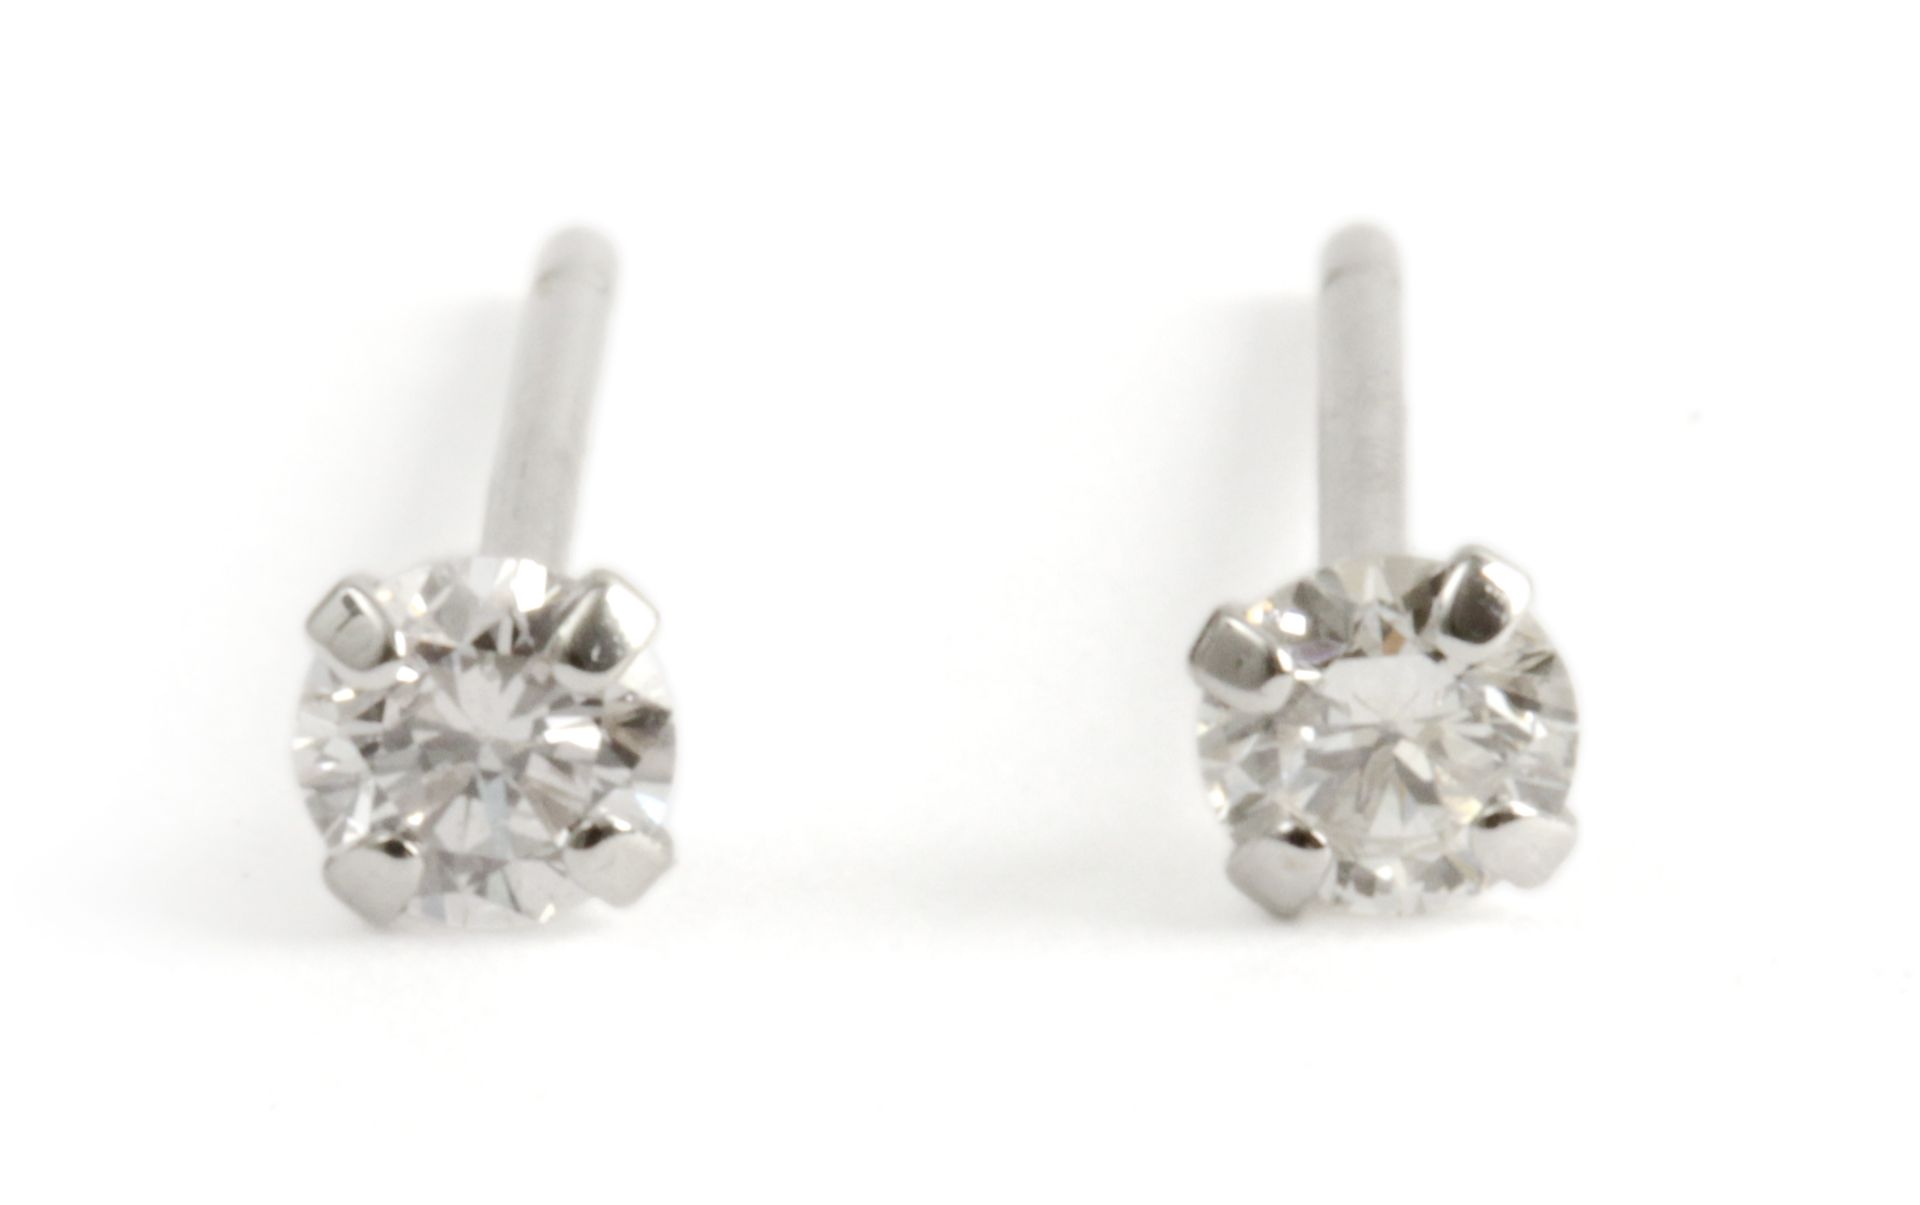 18k. white gold and brilliant cut diamonds stud earrings